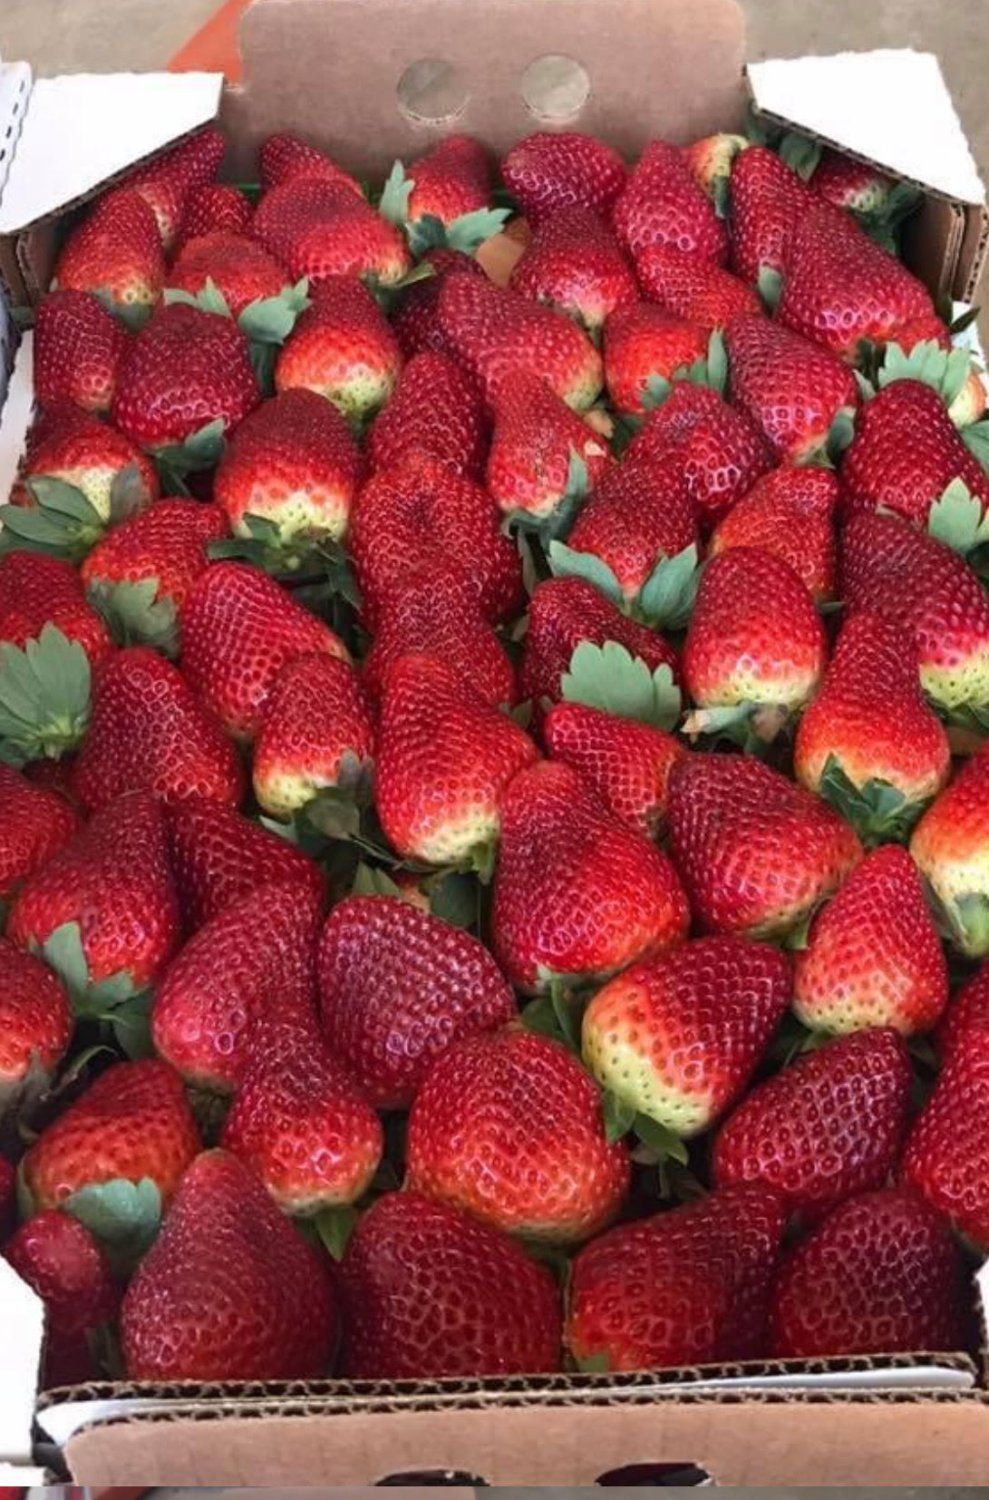 Strawberries Are Here!